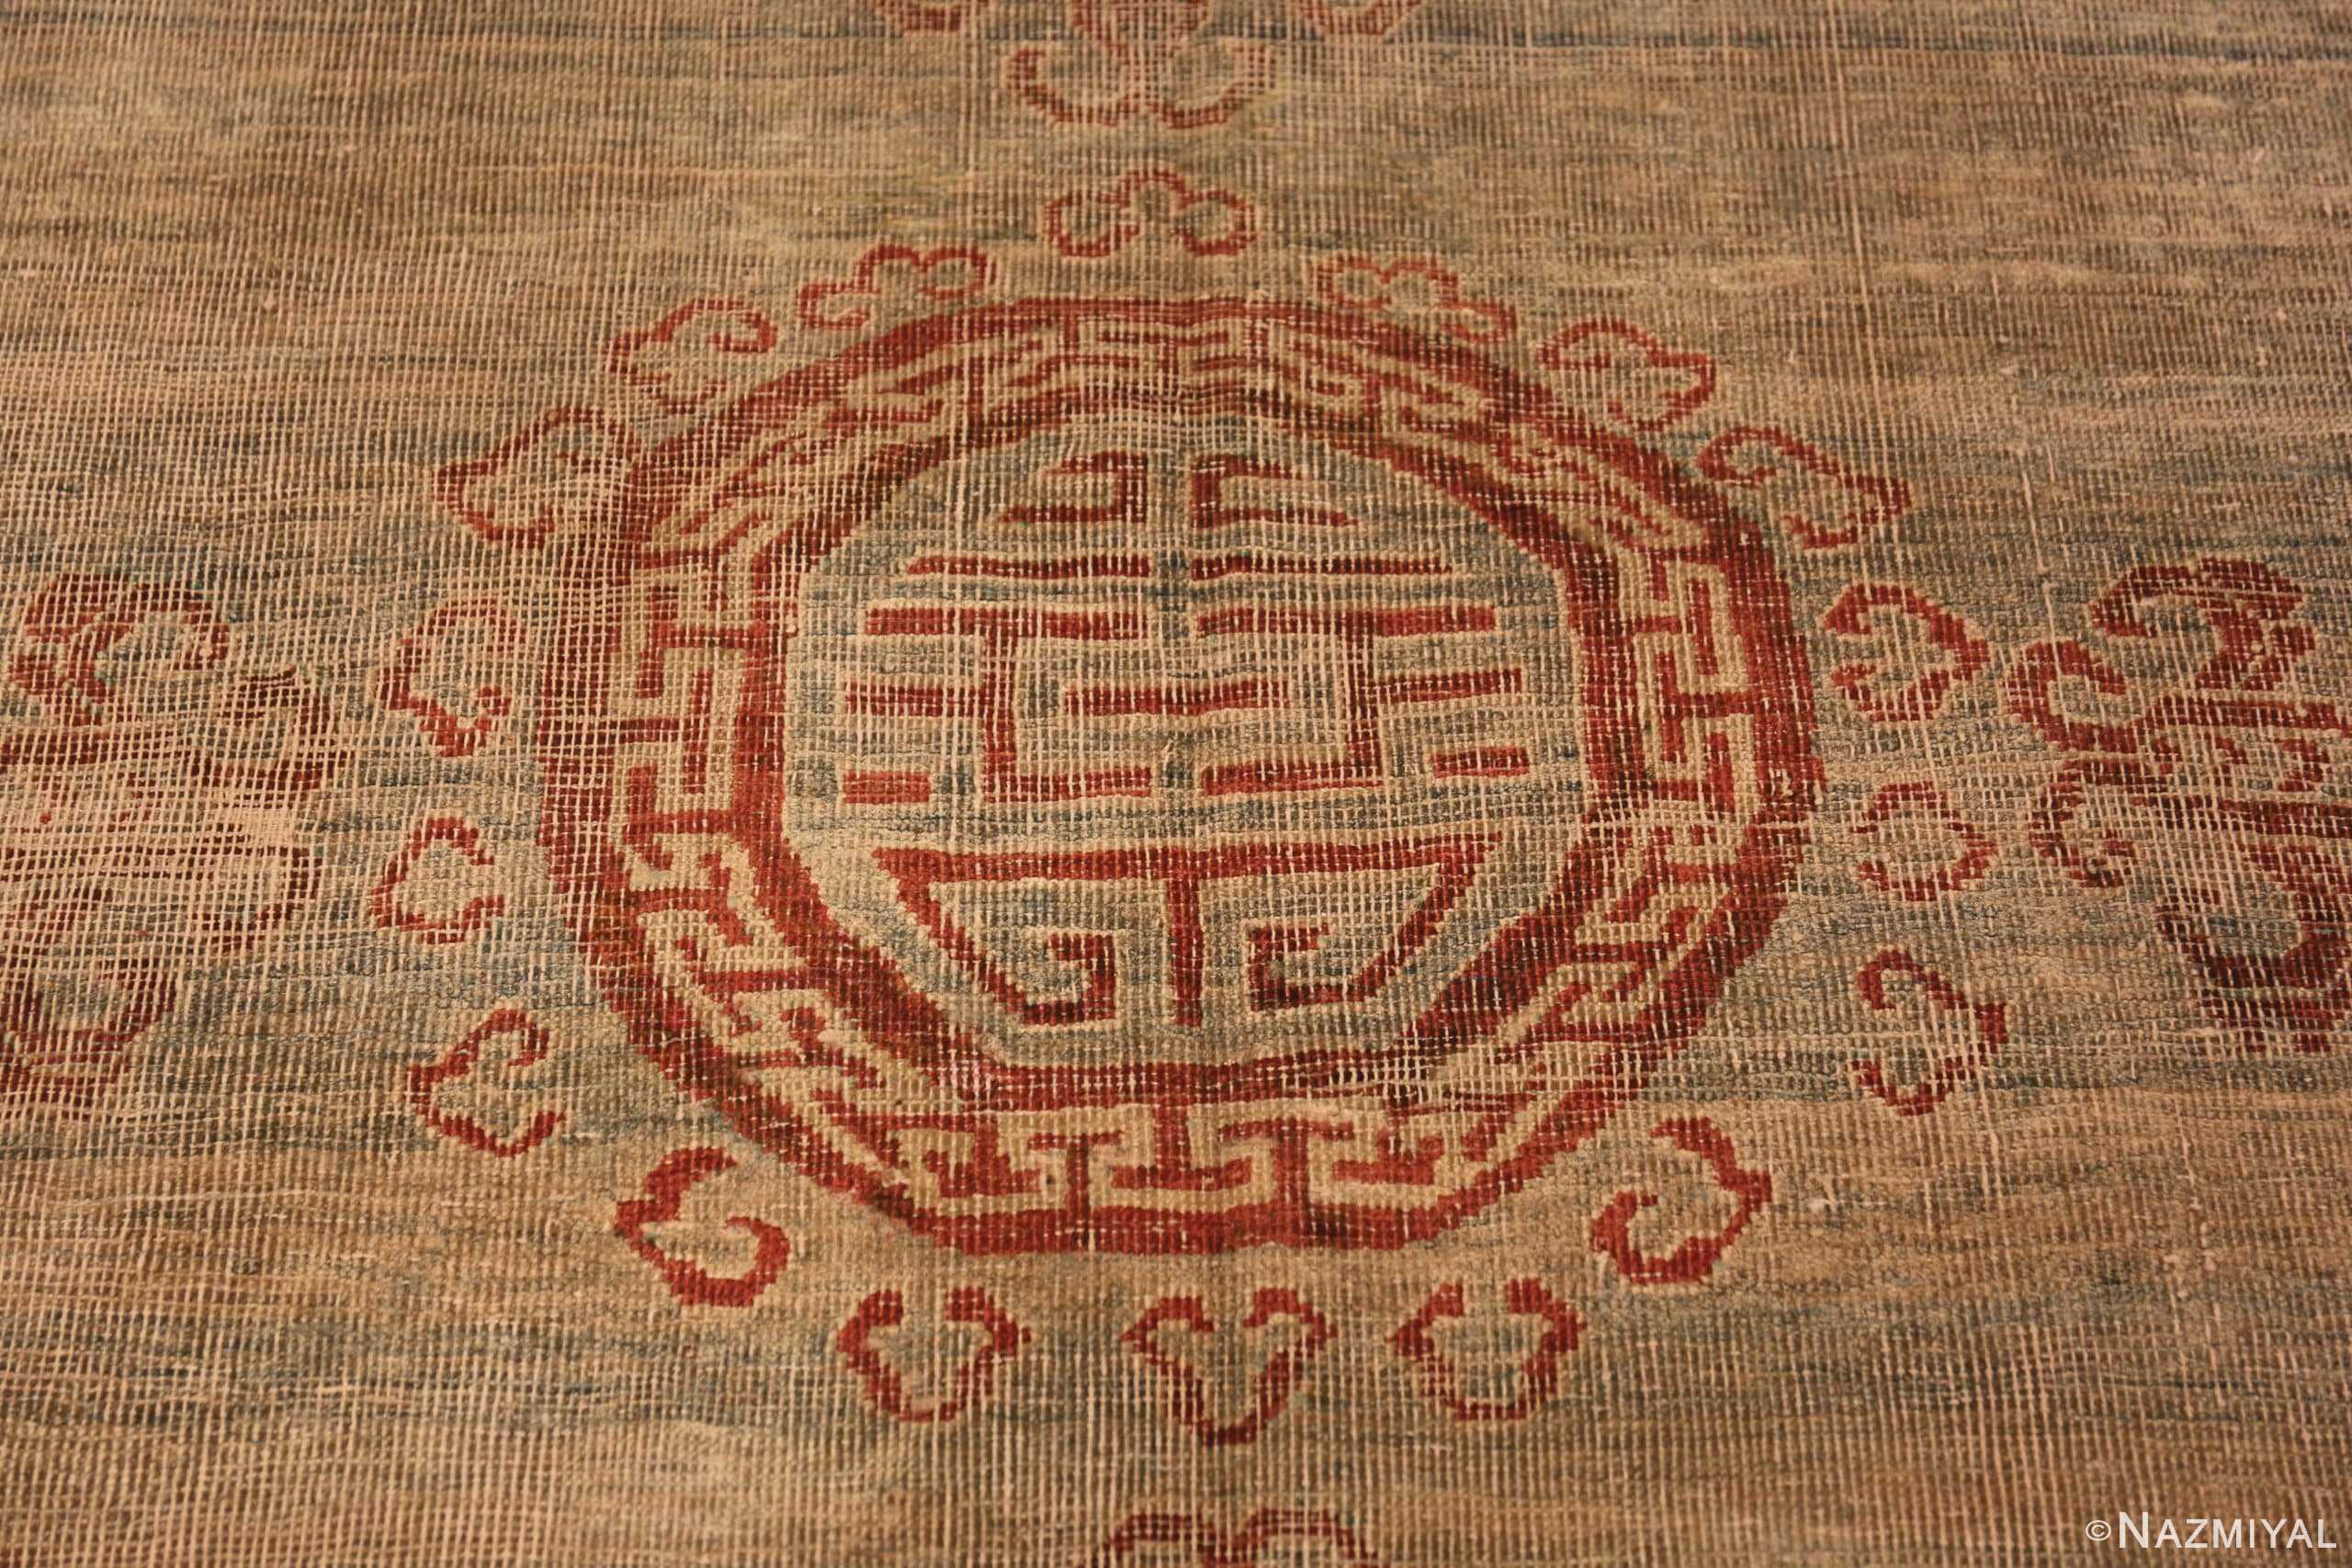 Details Of Silk Antique East Turkestan Khotan Rug 49945 by Nazmiyal Antique Rugs